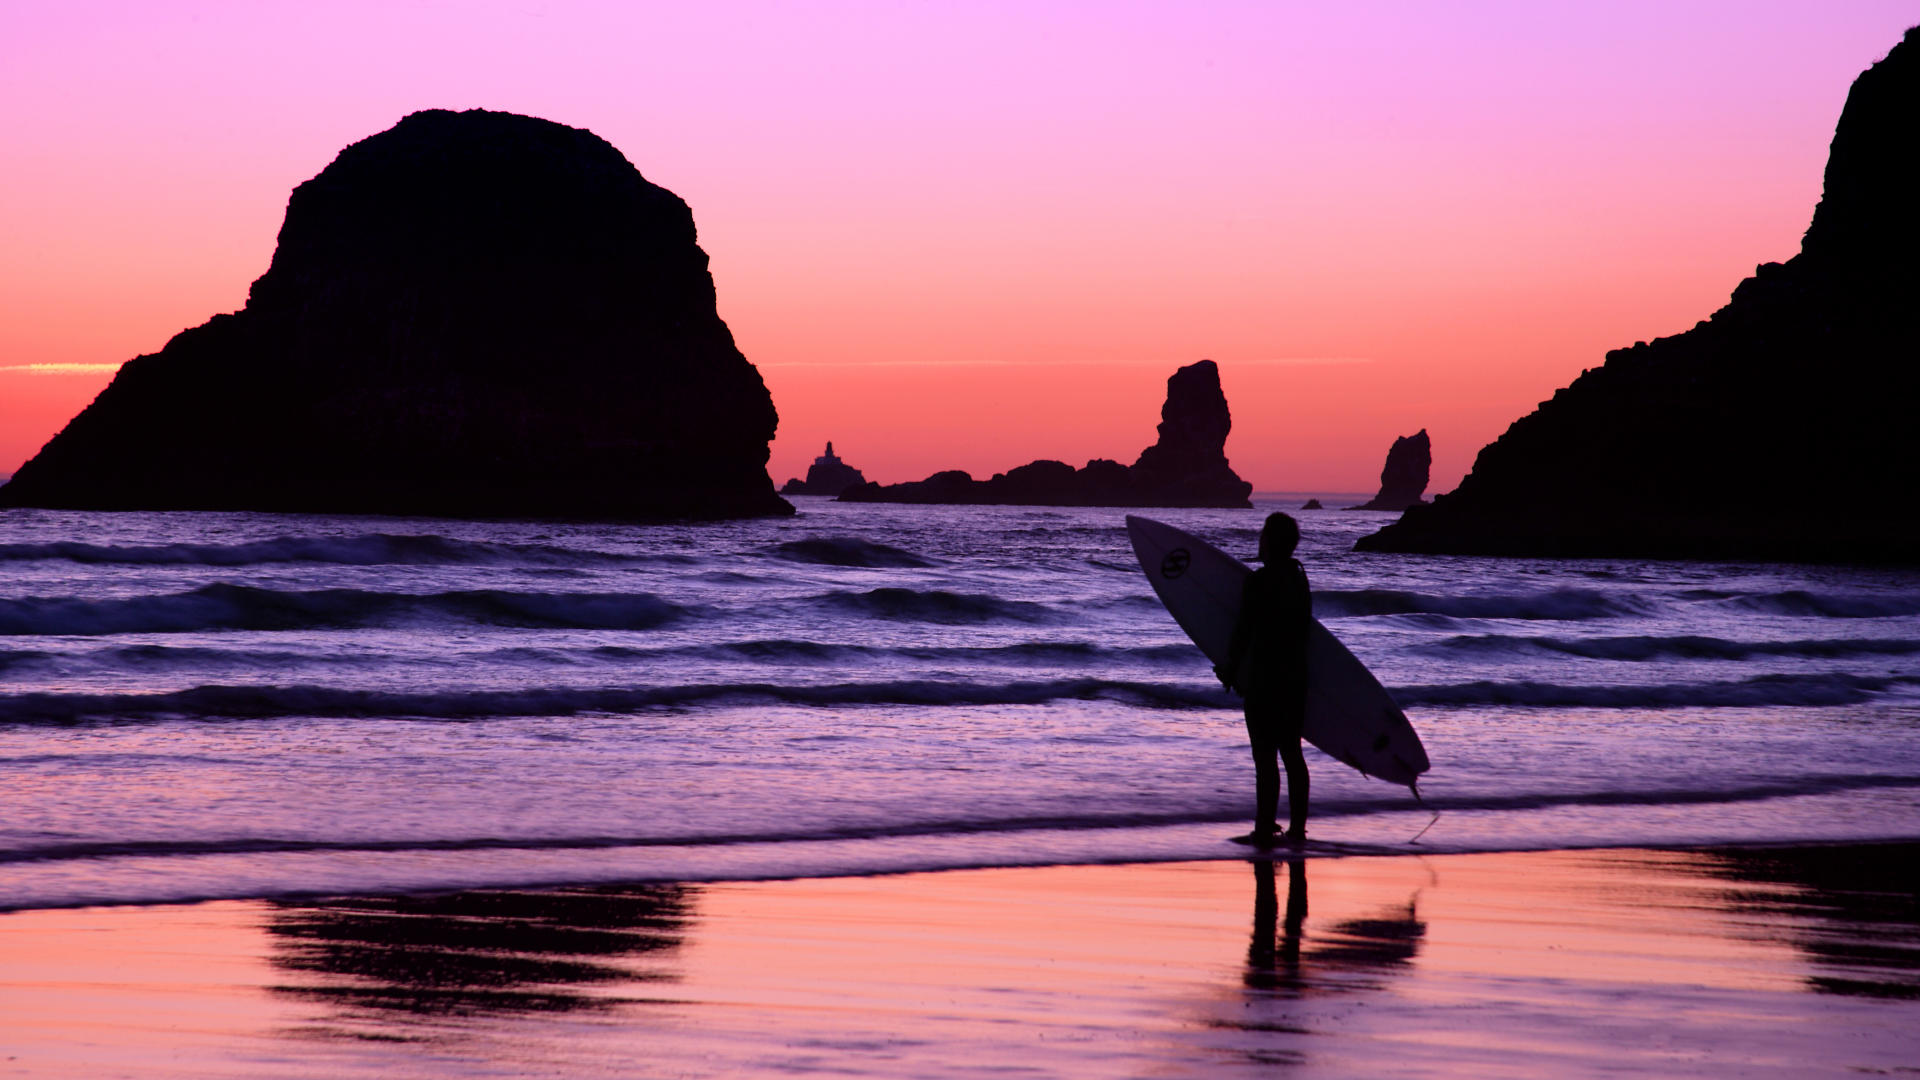 Wallpaper Surfer At Sunset Cannon Beach Oregon Always